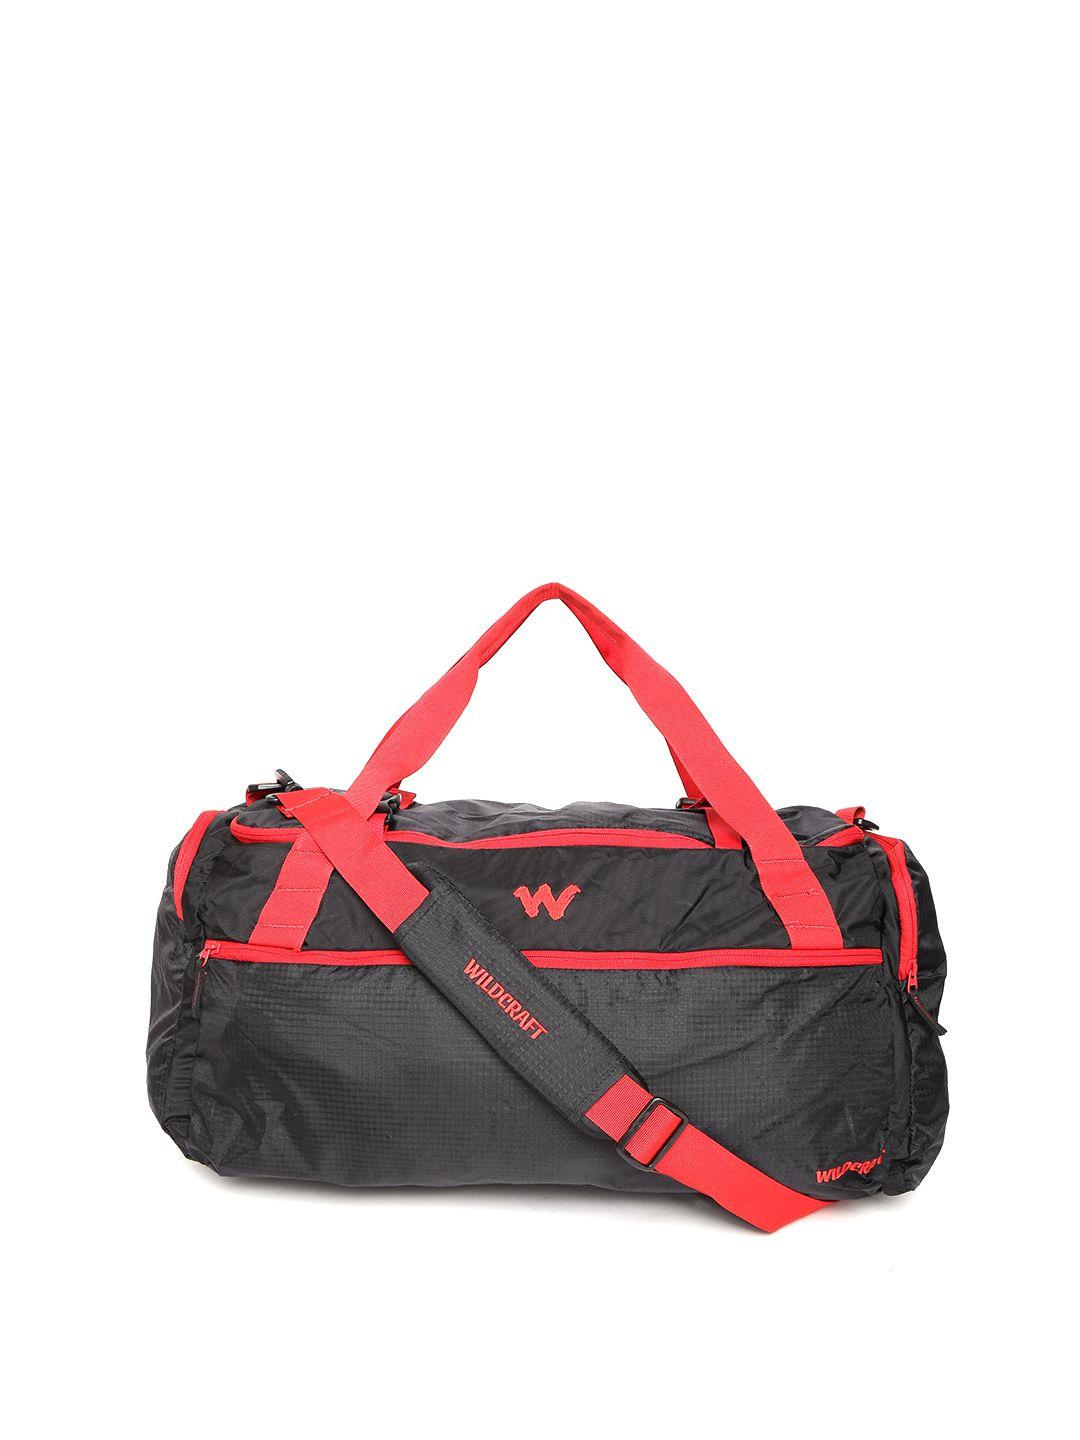 wildcraft unisex black commuter 2 duffel bag with shoulder strap